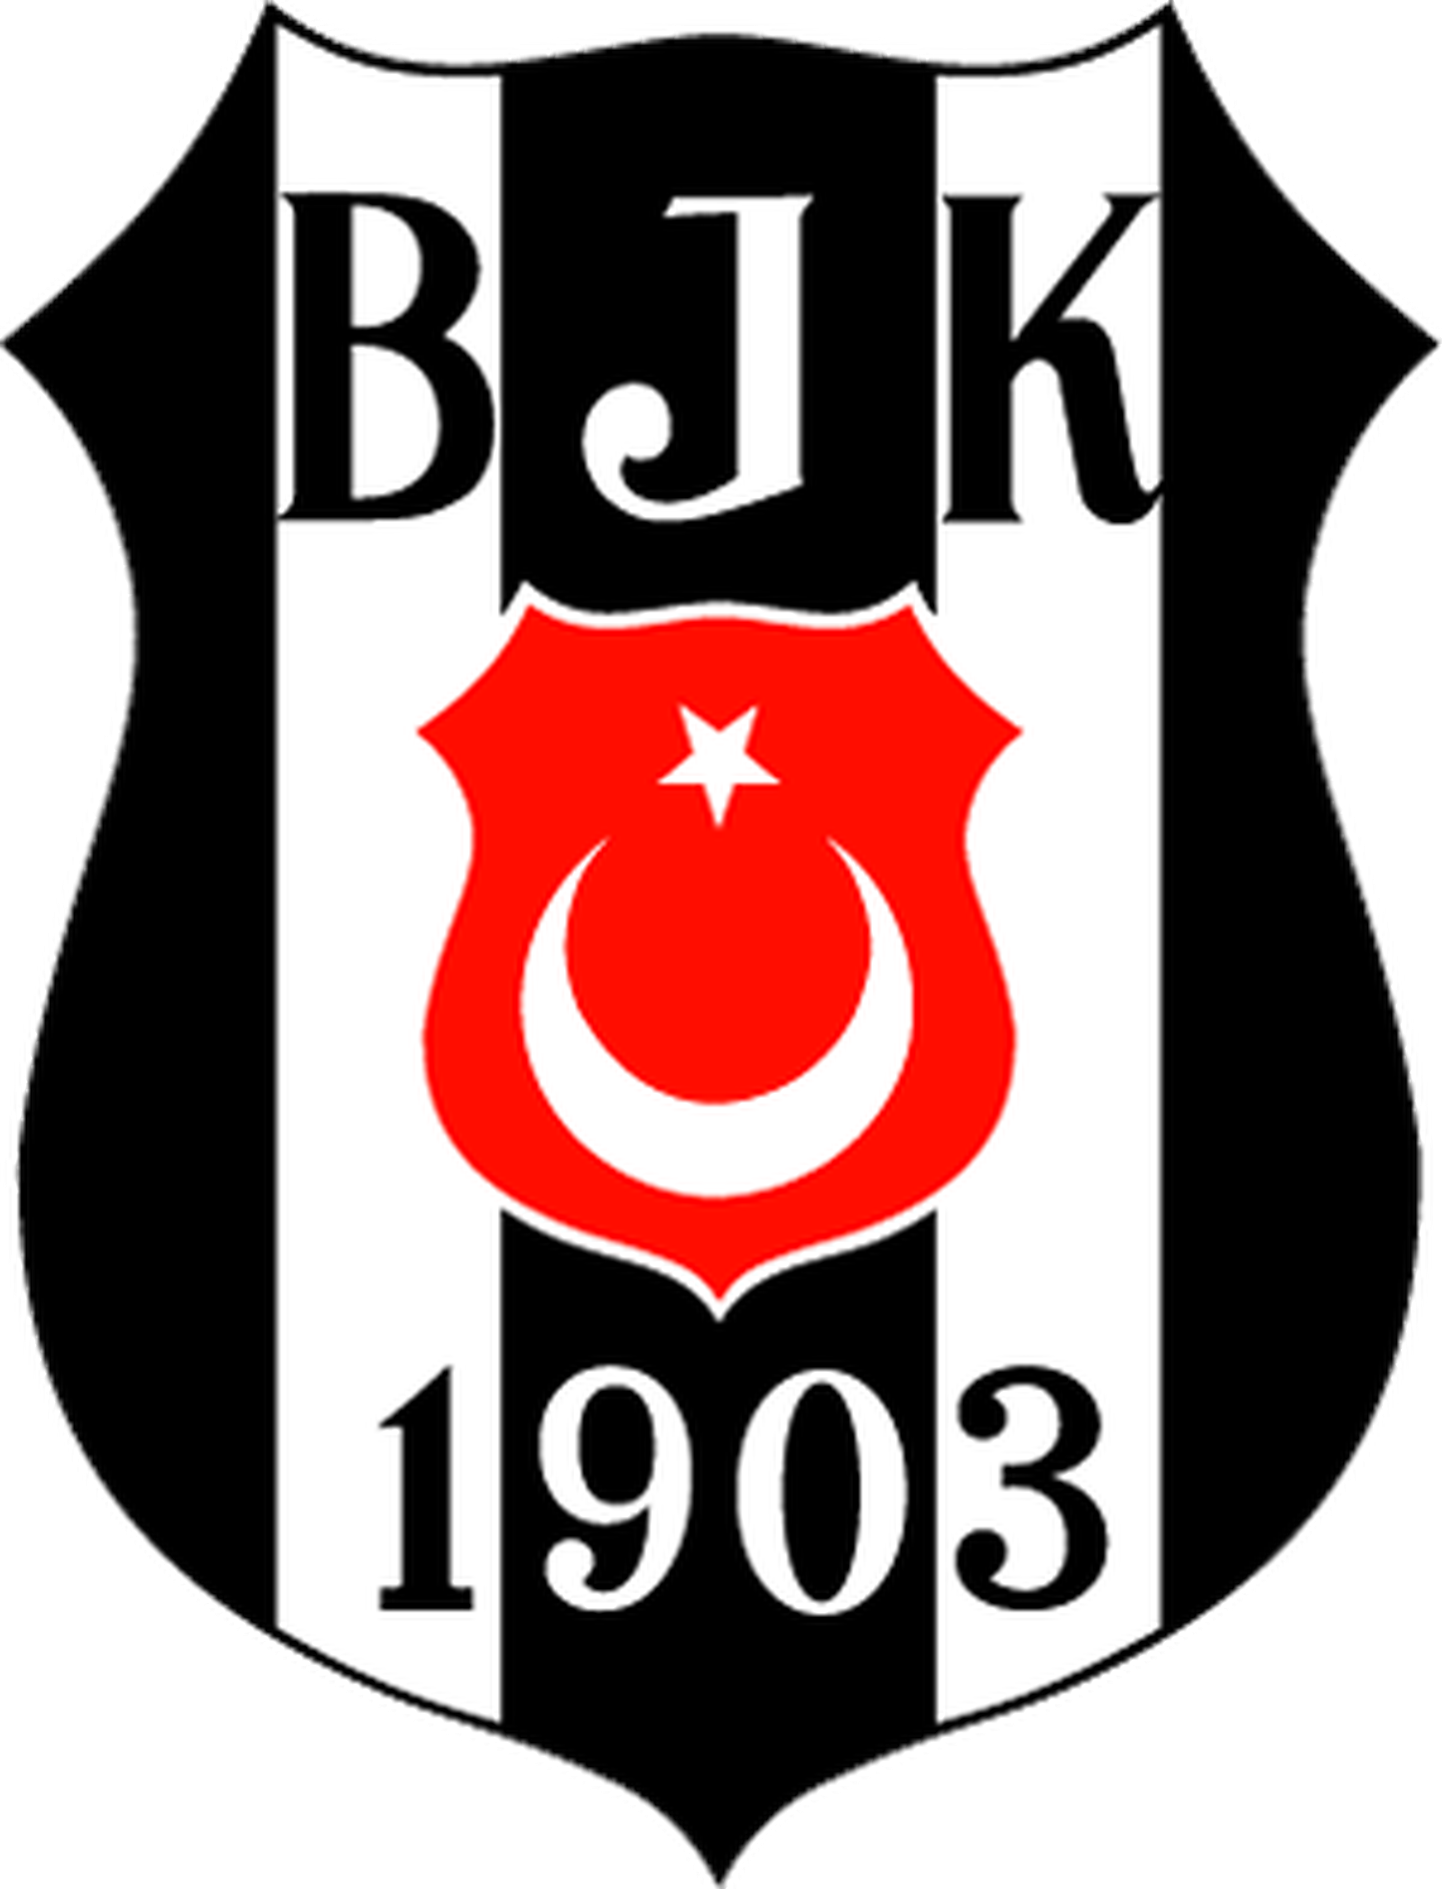 Istanbuli Besiktasi logo.